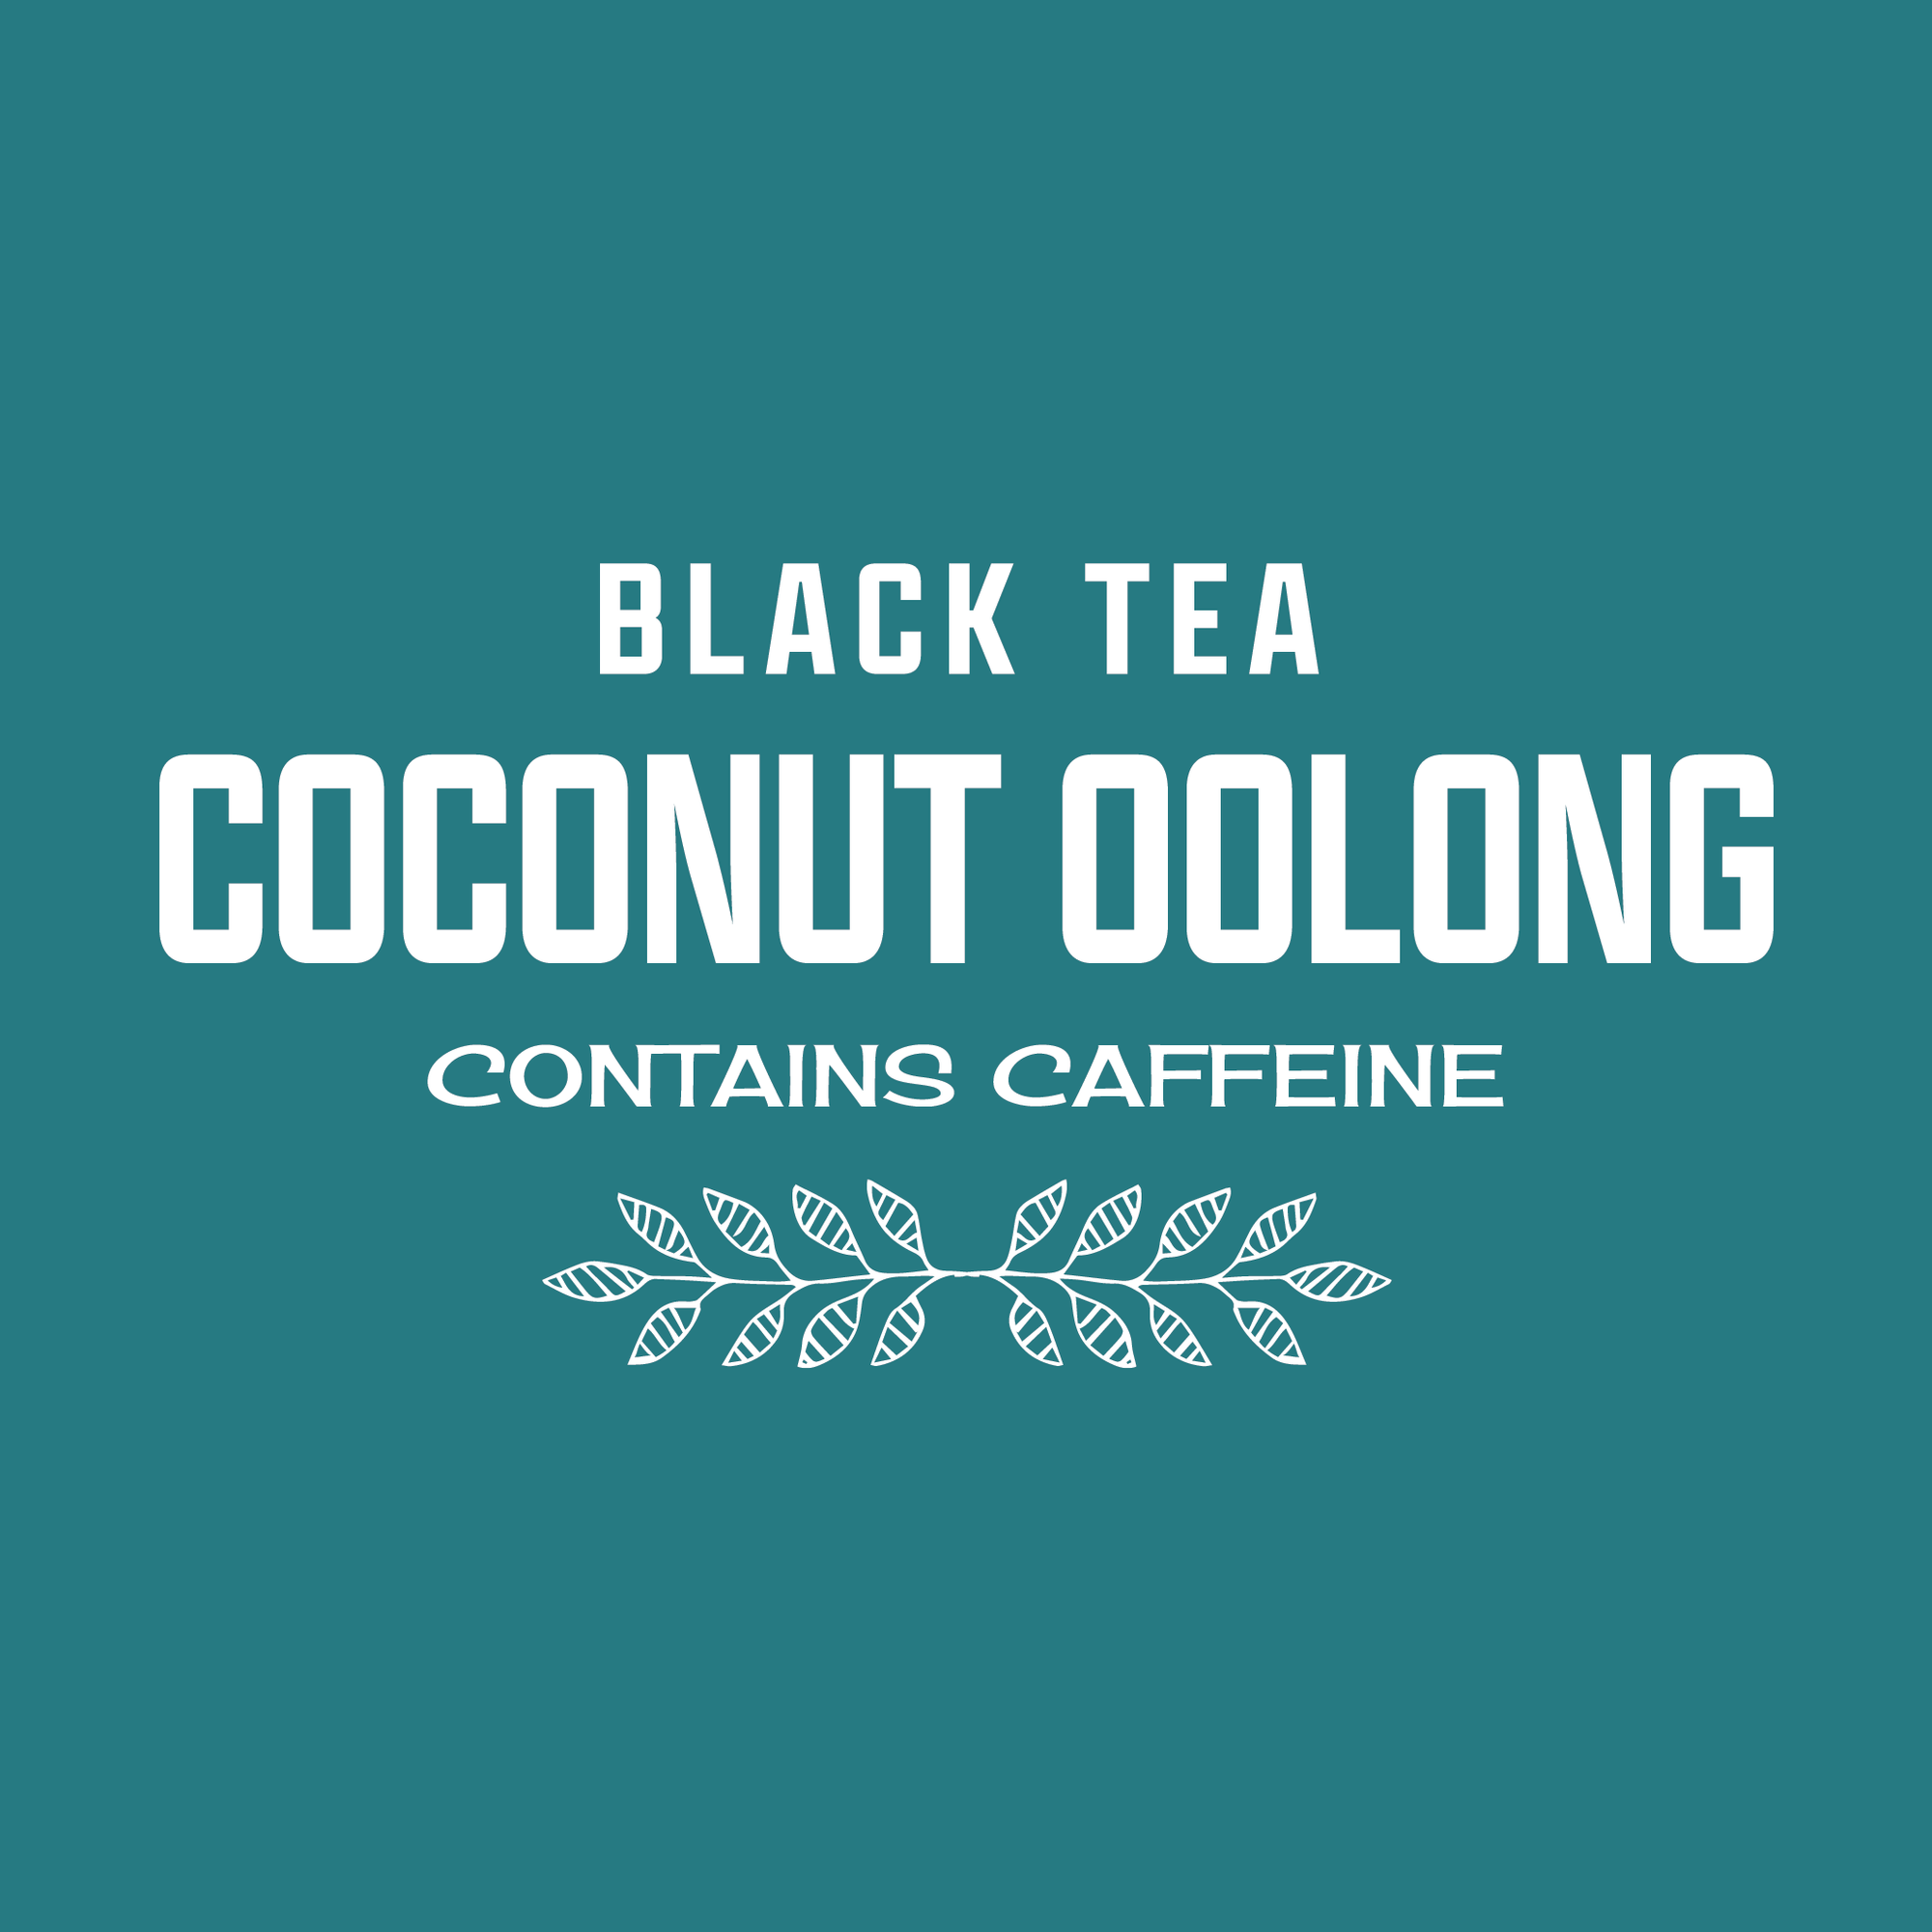 Coconut Oolong Tea